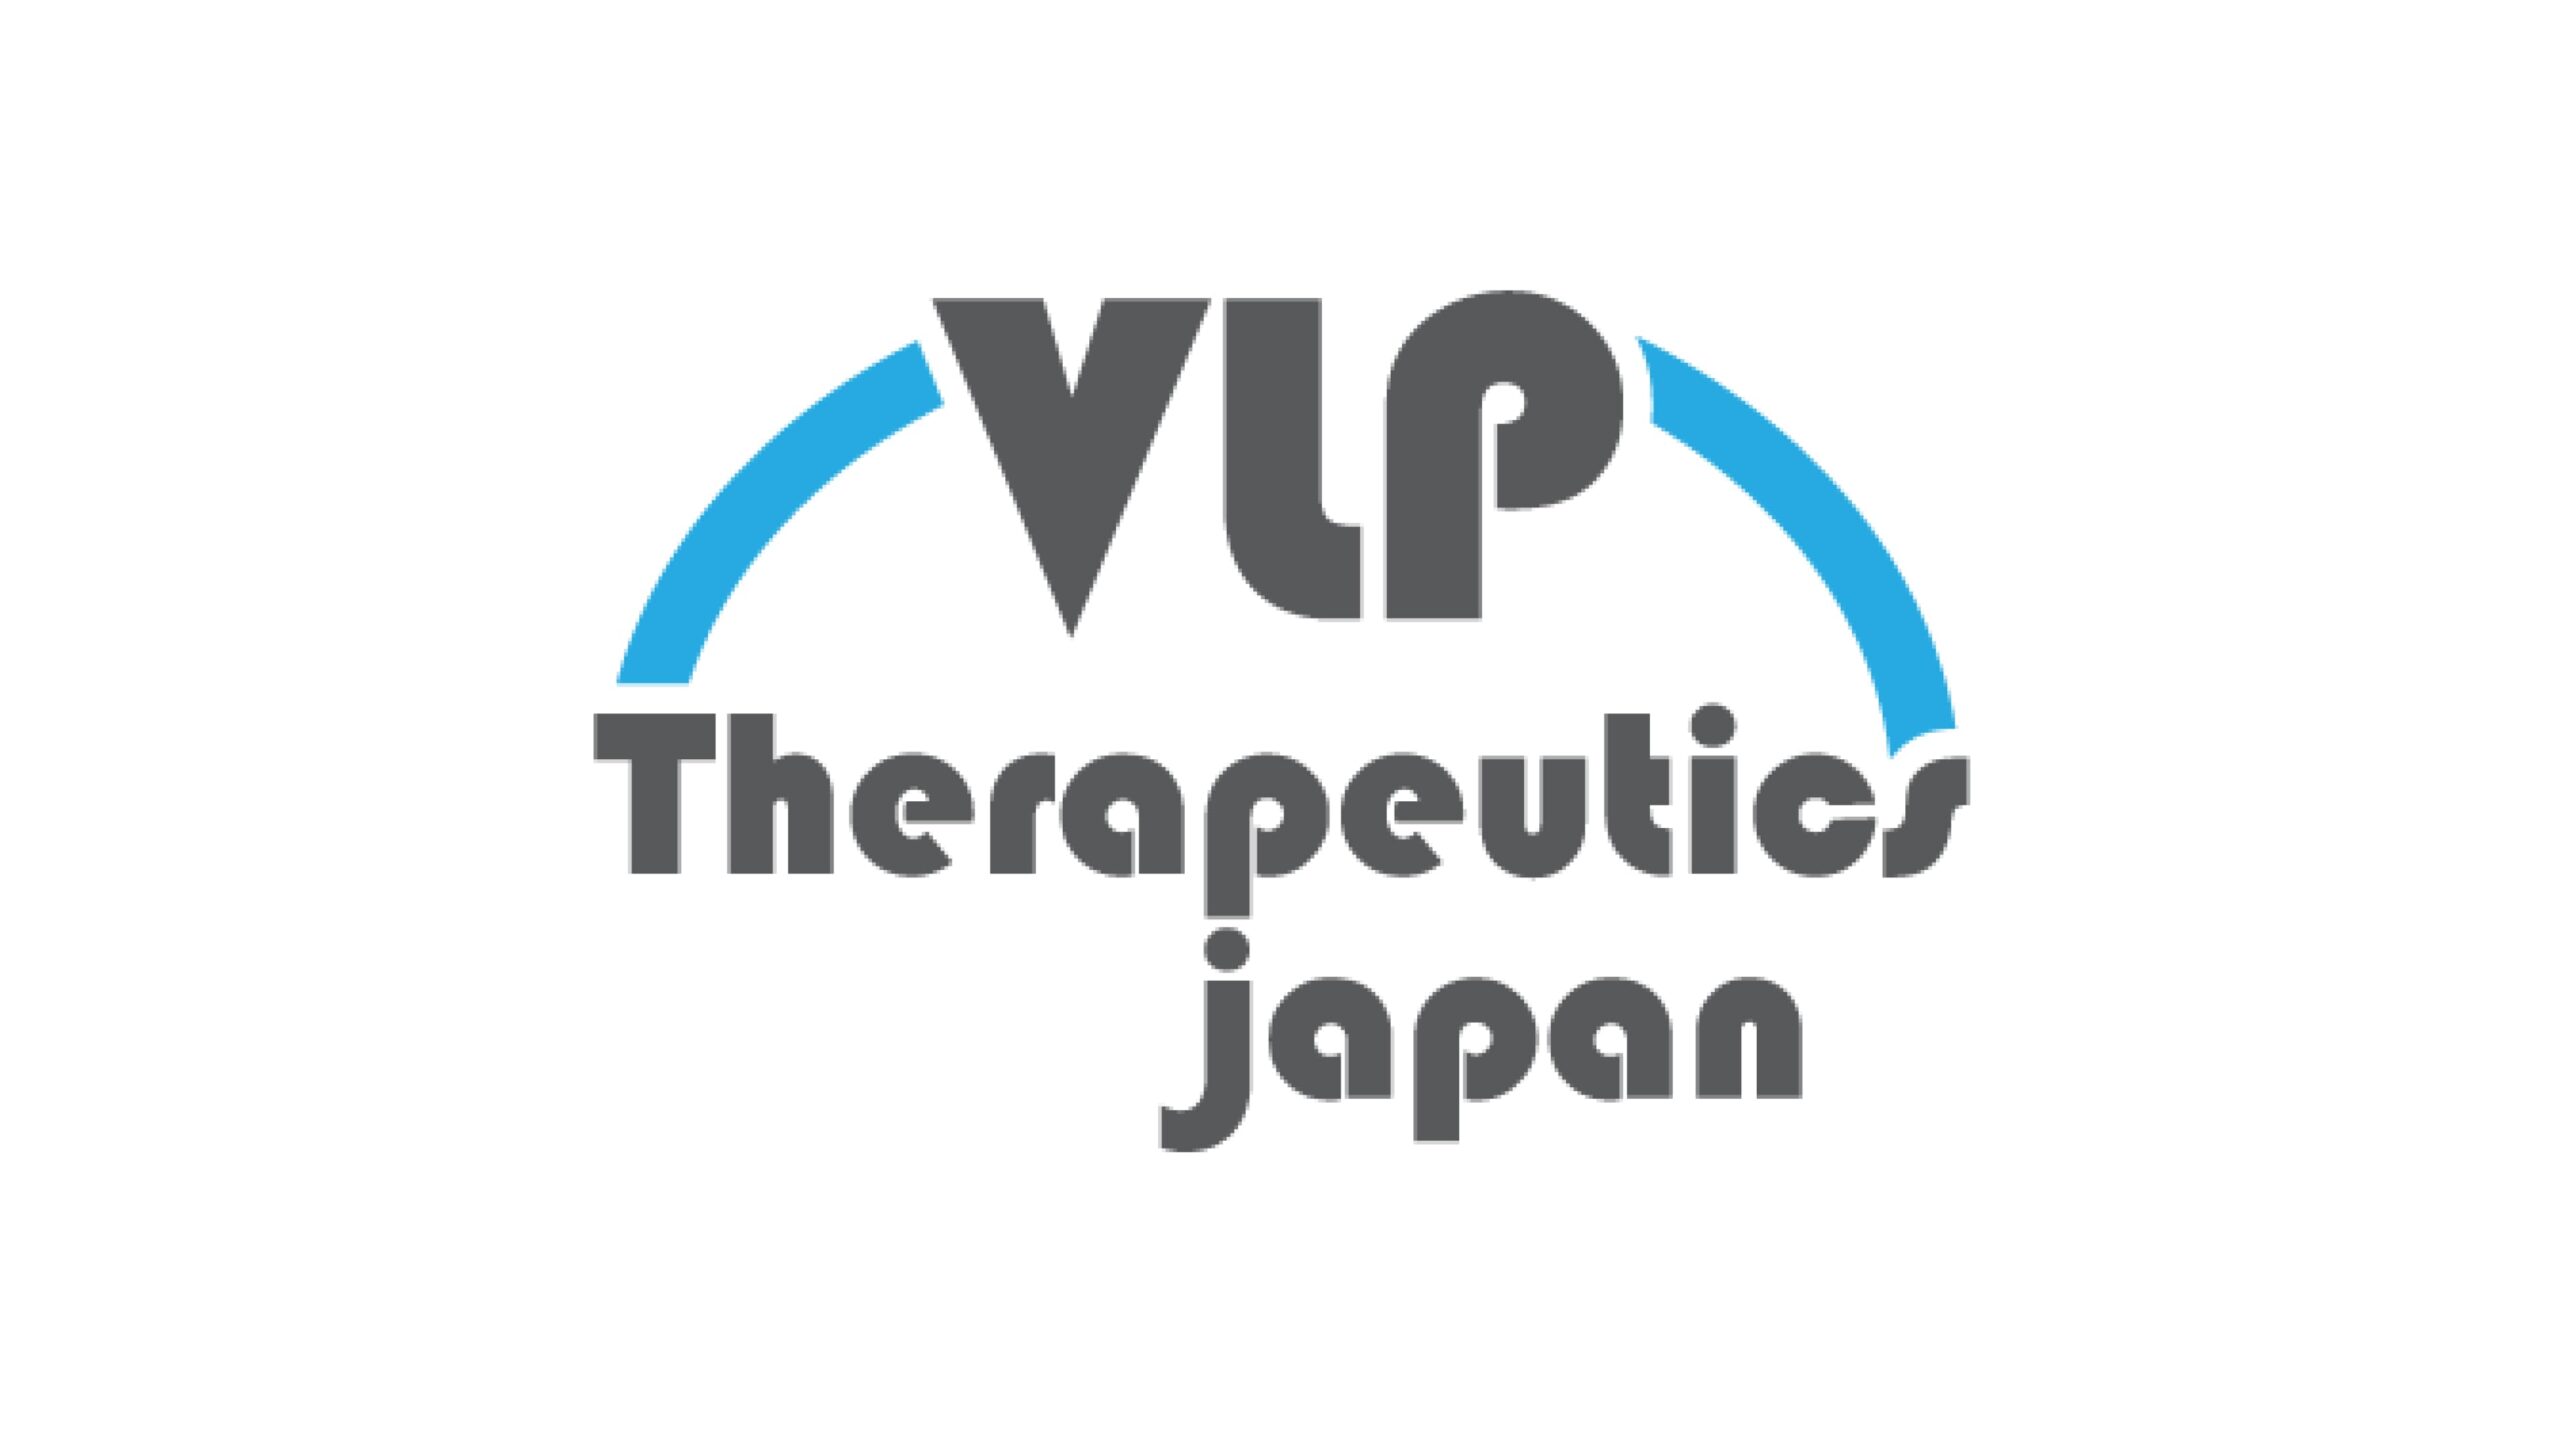 VLP Therapeutics Japan株式会社、東洋インキSCホールディングス株式会社などからの資金調達を発表